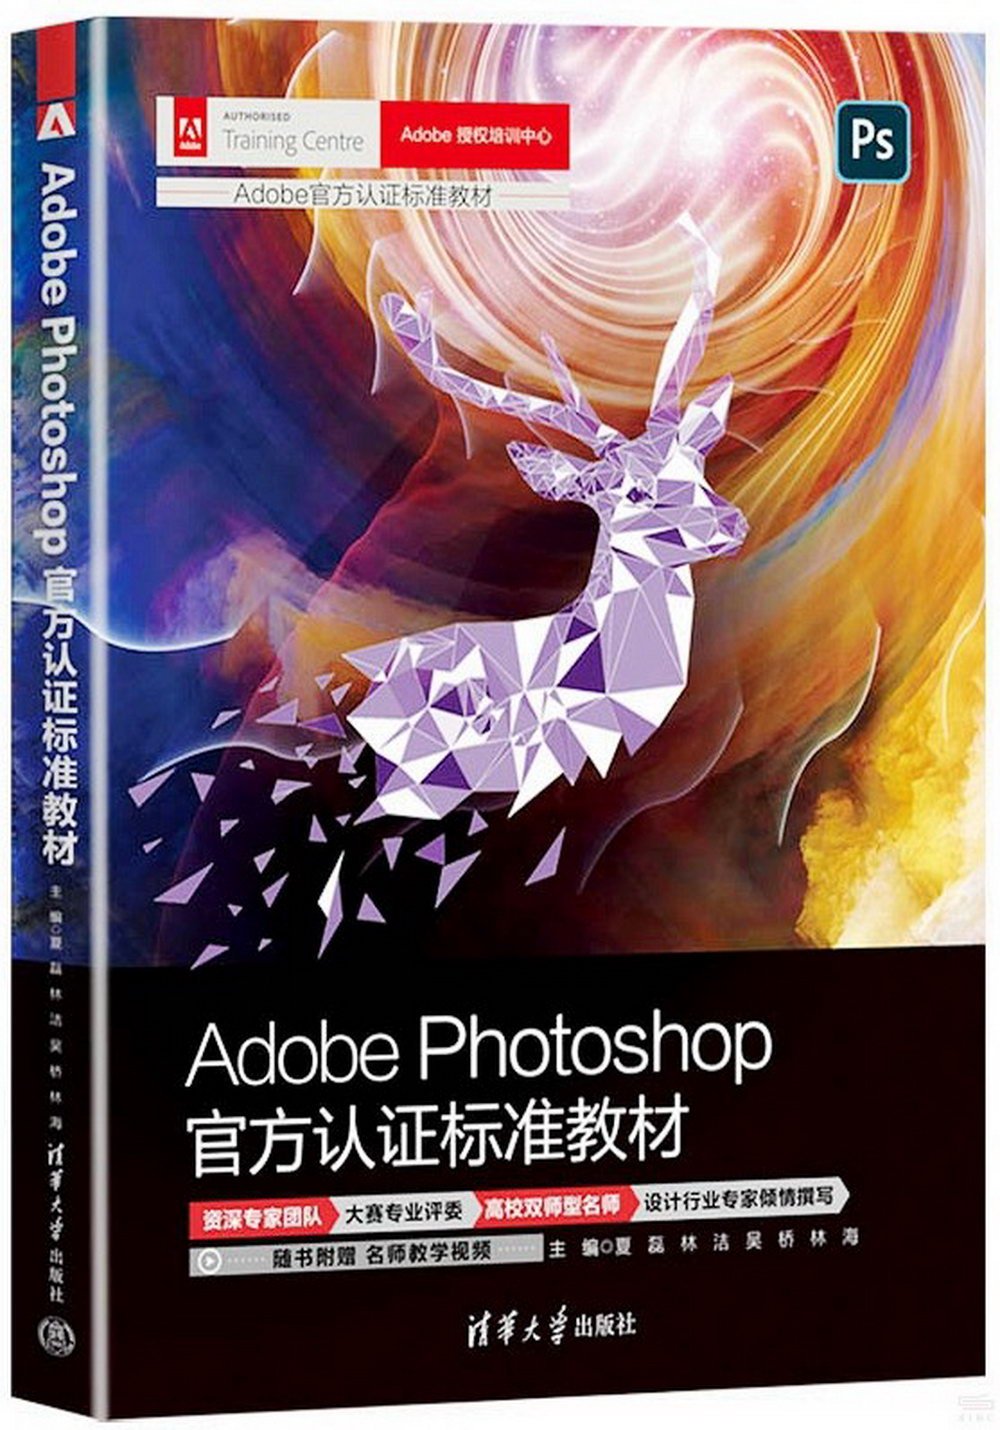 Adobe Photoshop官方認證標準教材